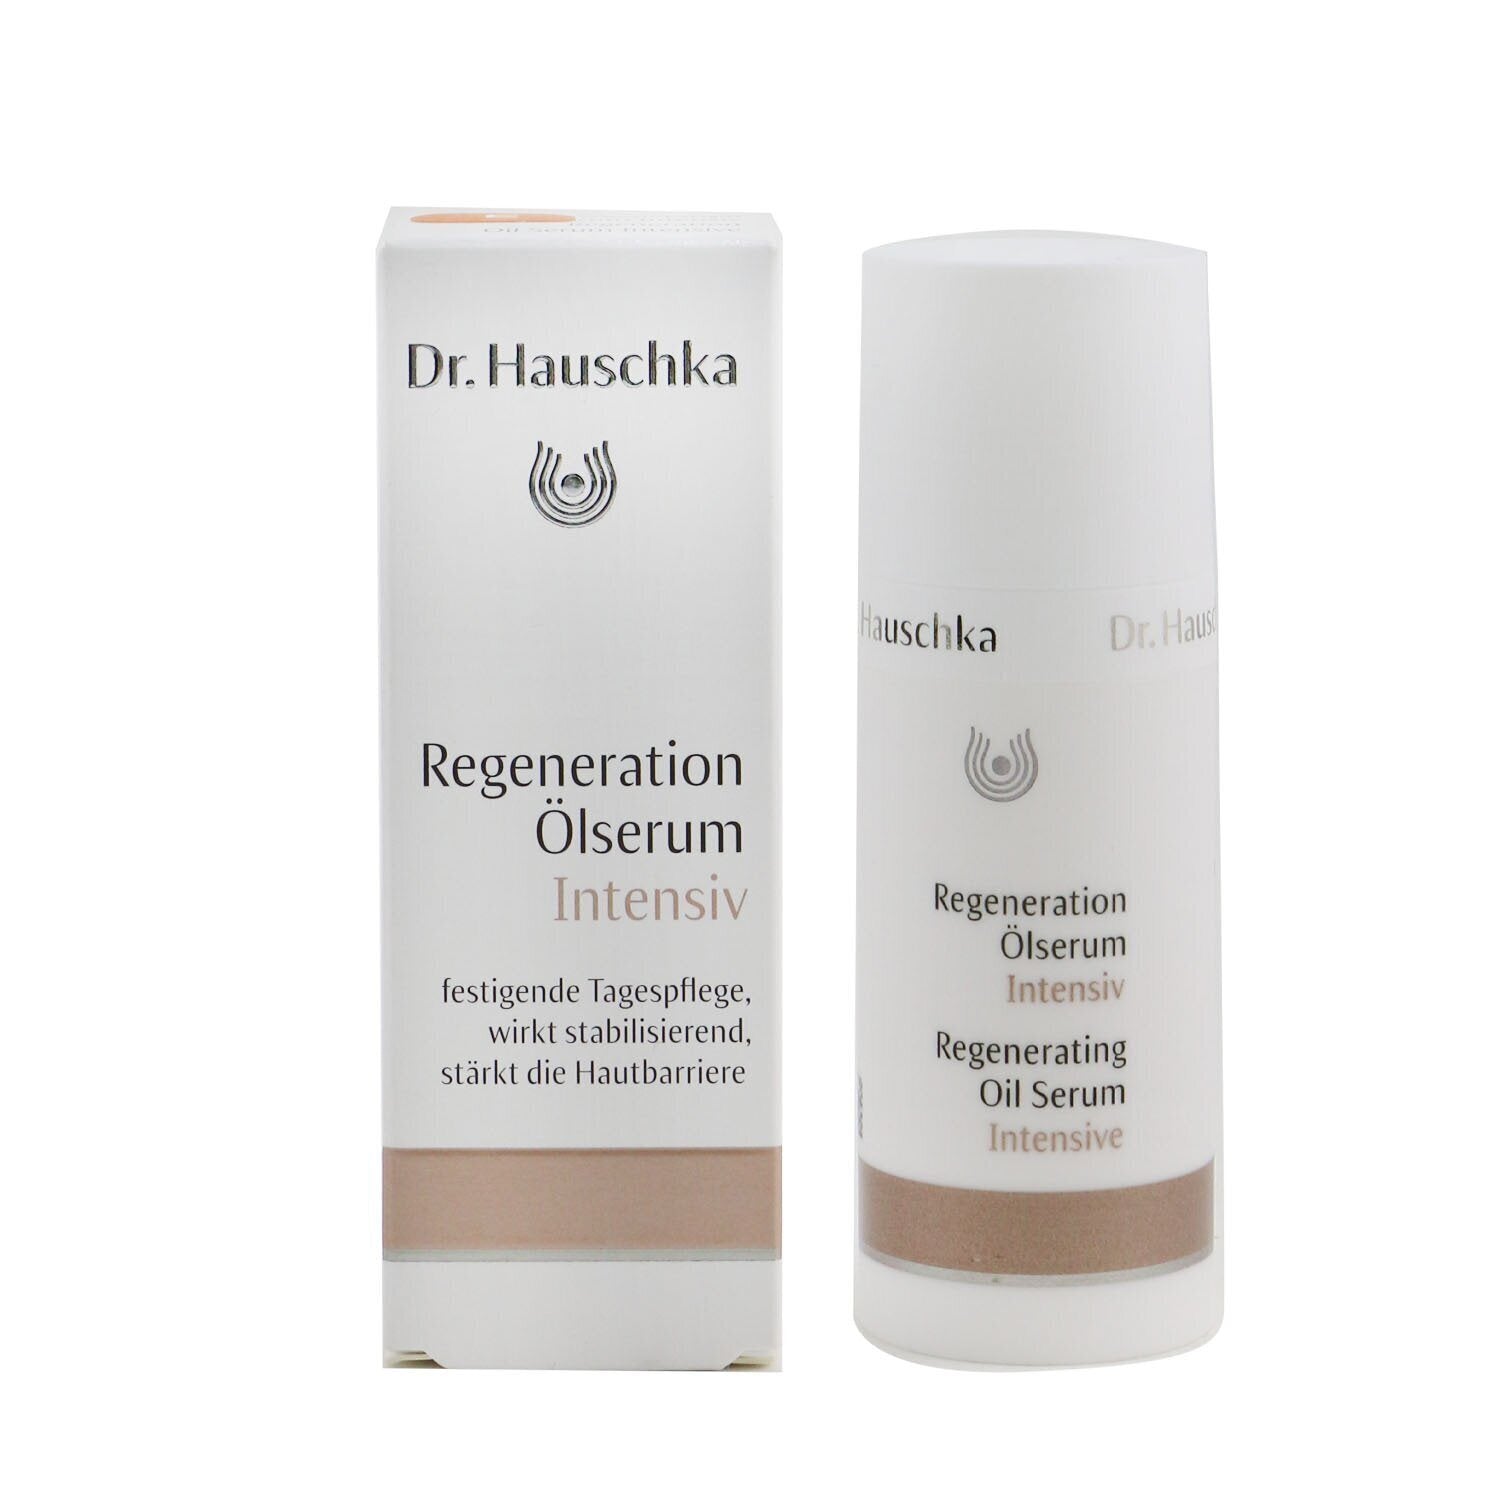 DR. HAUSCHKA - Regenerating Oil Serum Intensive - 20ml/0.76oz 3P's Inclusive Beauty